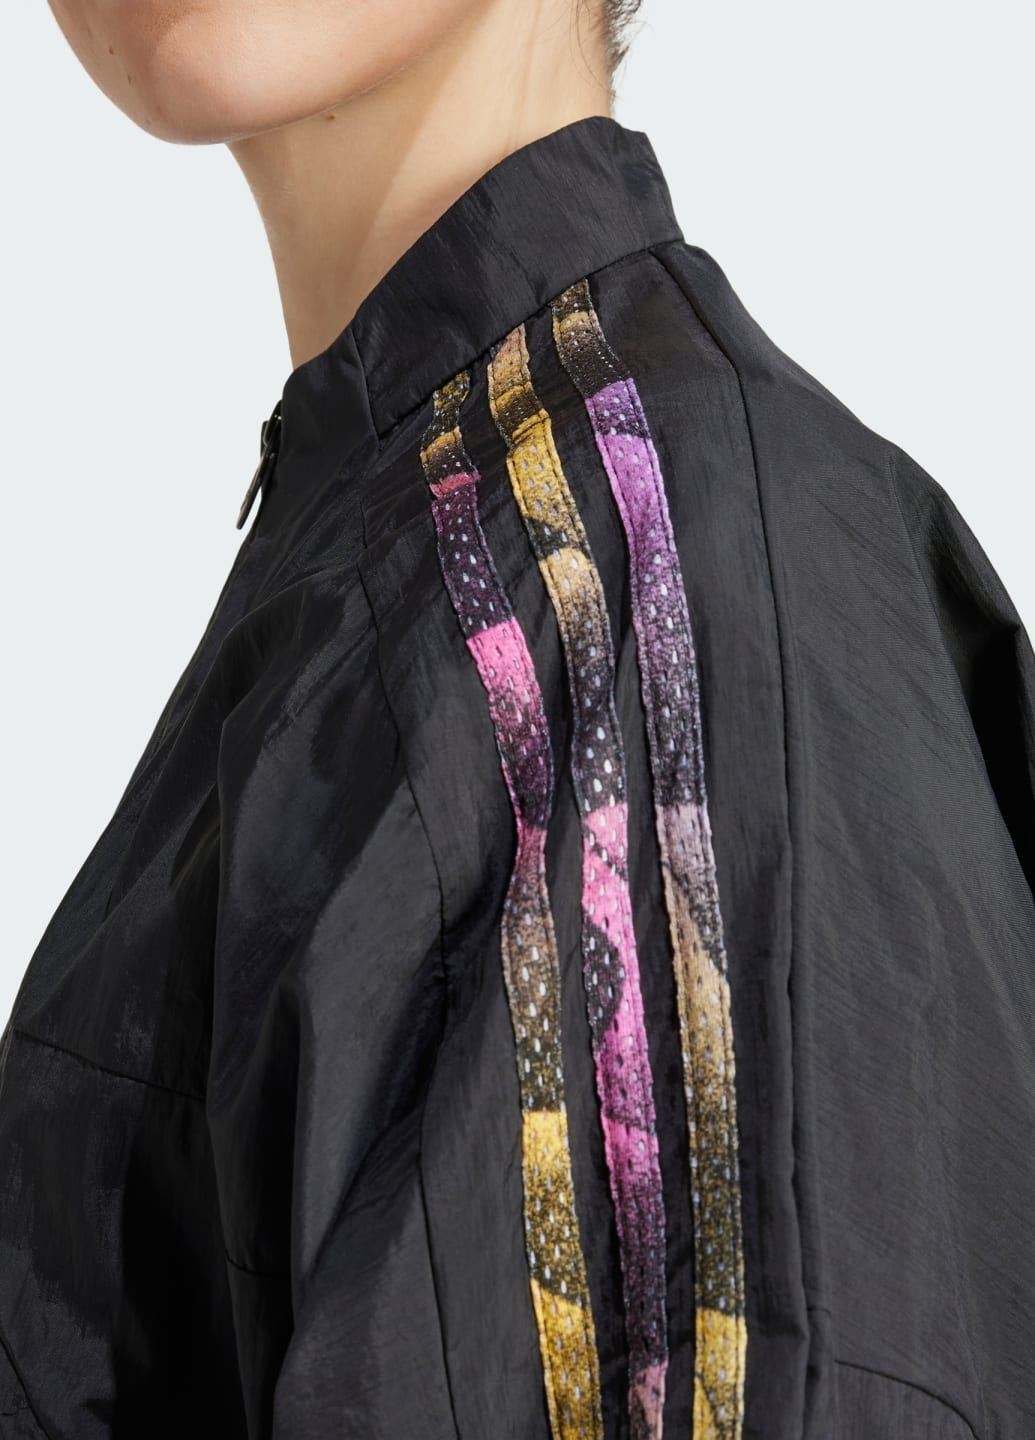 Олимпийка Tiro Cut 3-Stripes Summer Woven adidas (289977280)